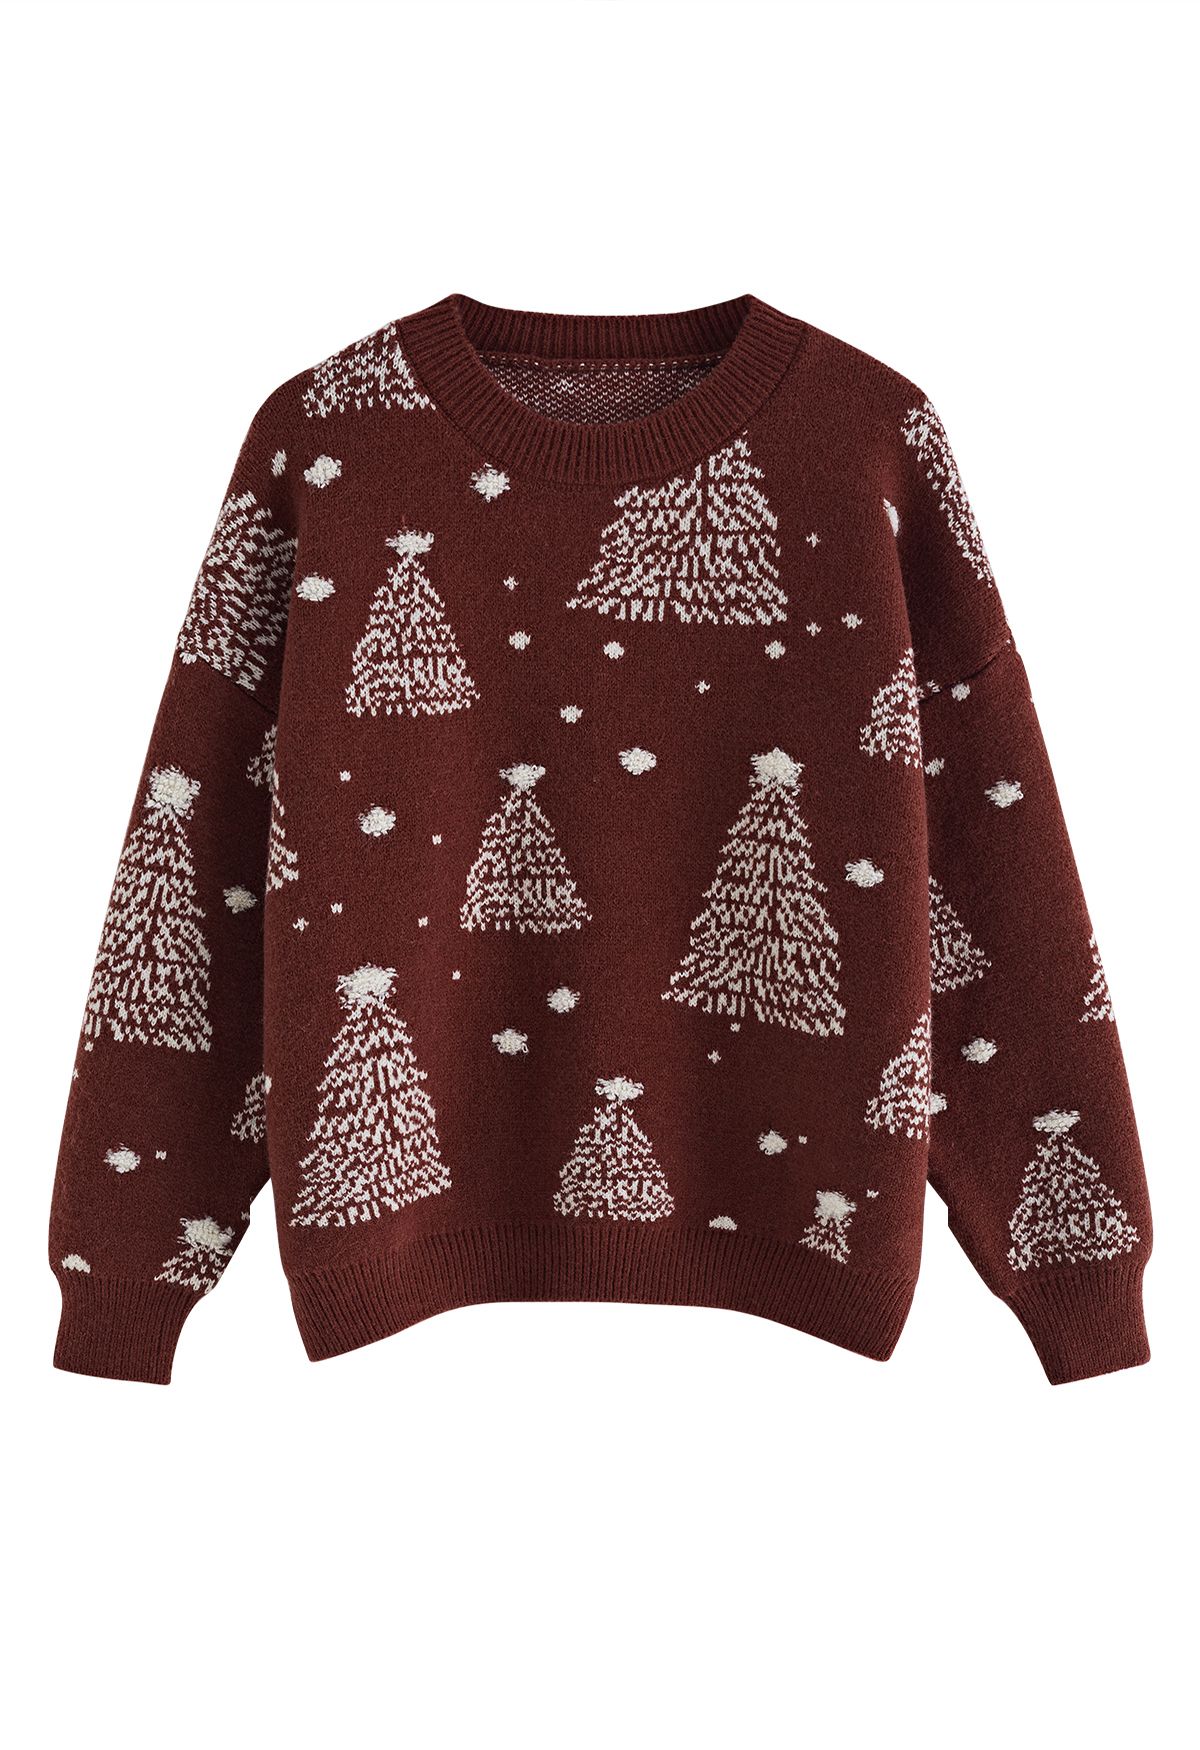 Christmas Tree Pattern Jacquard Knit Sweater in Burgundy